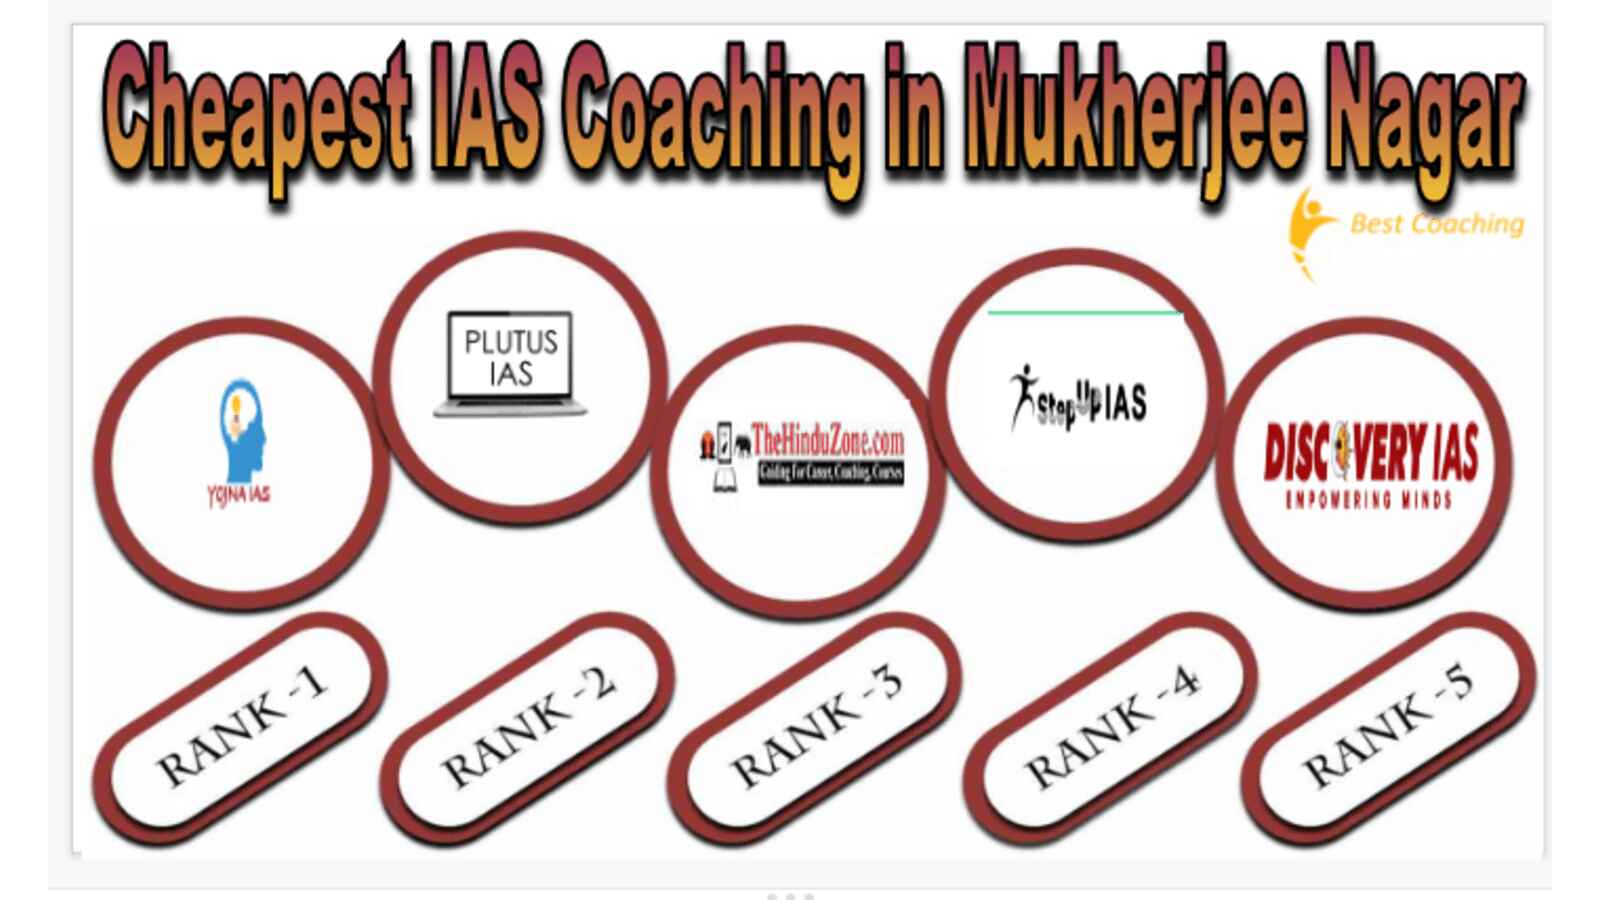 Cheapest IAS Coaching in Mukherjee Nagar